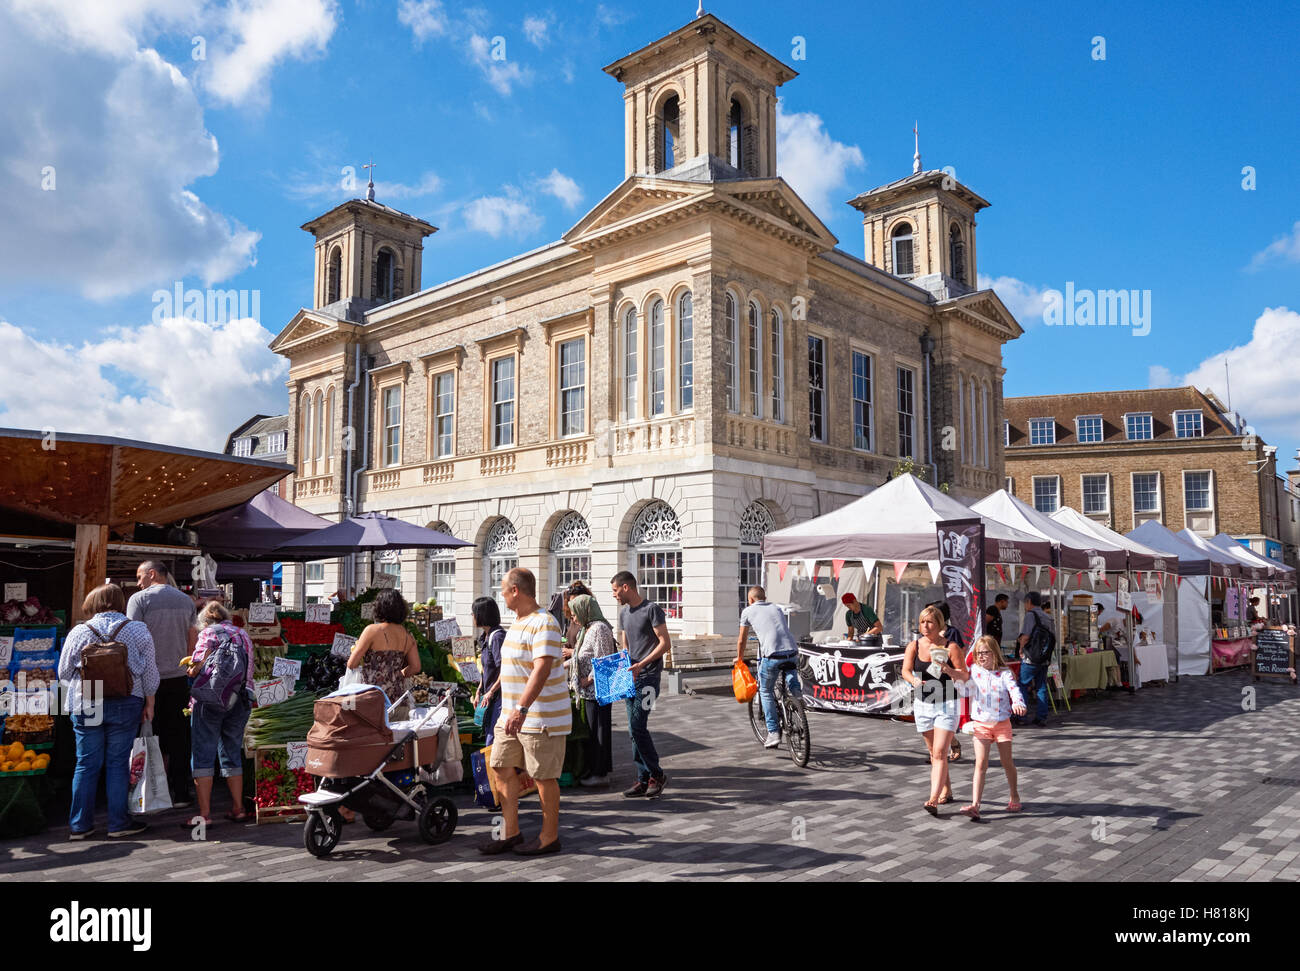 People on Market Place with Market House in Kingston upon Thames, England United Kingdom UK Stock Photo